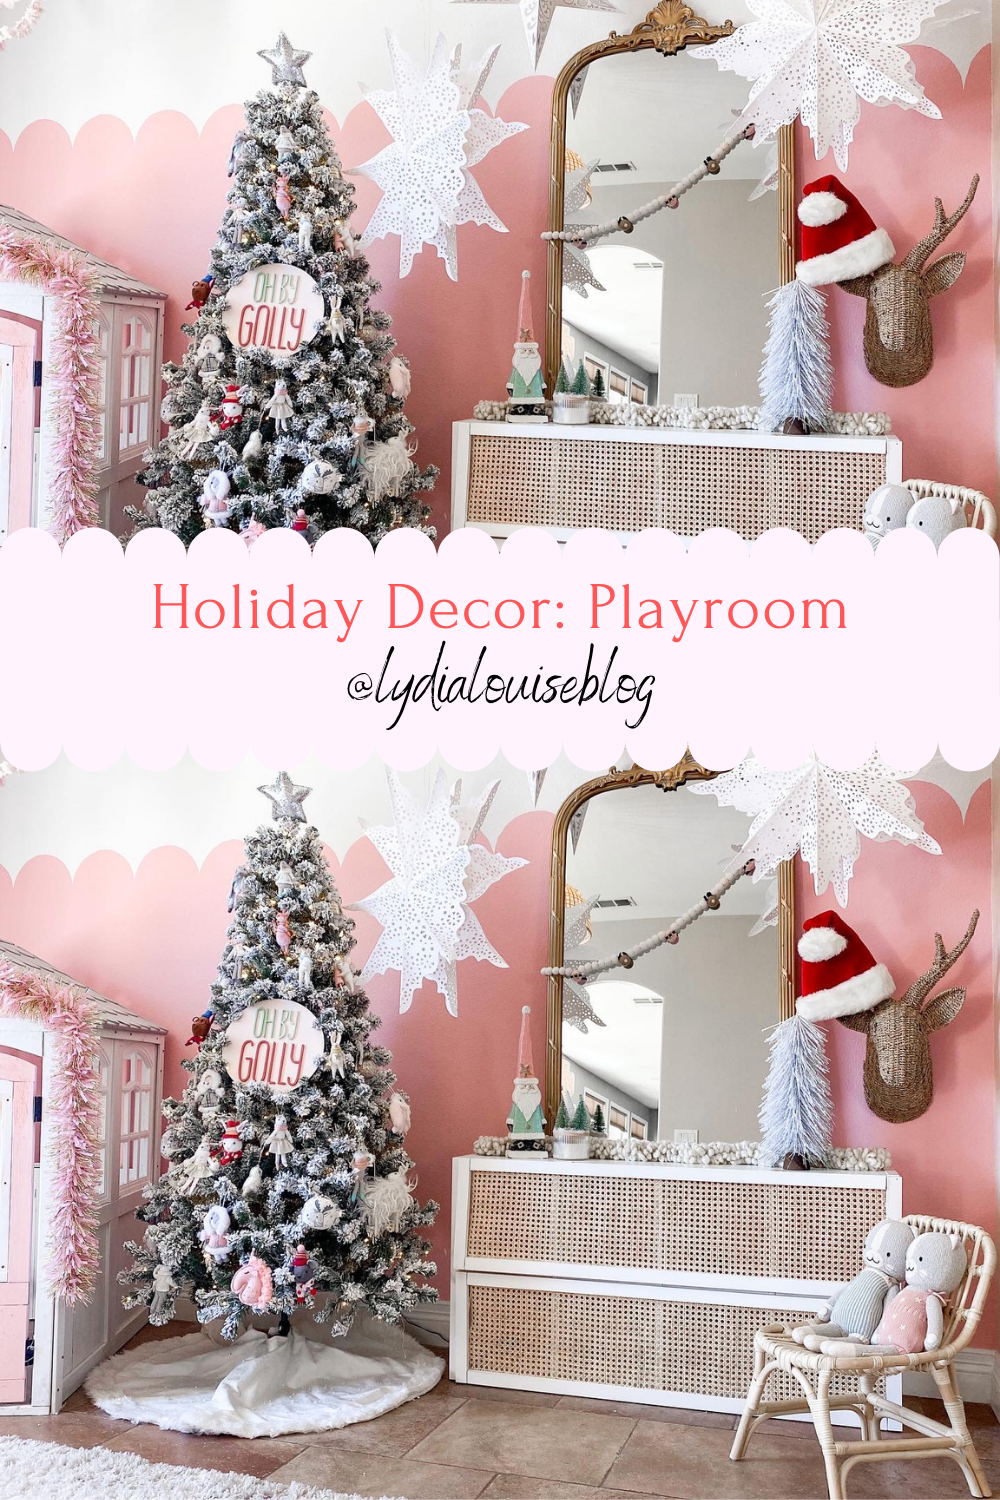 Holiday decor playroom